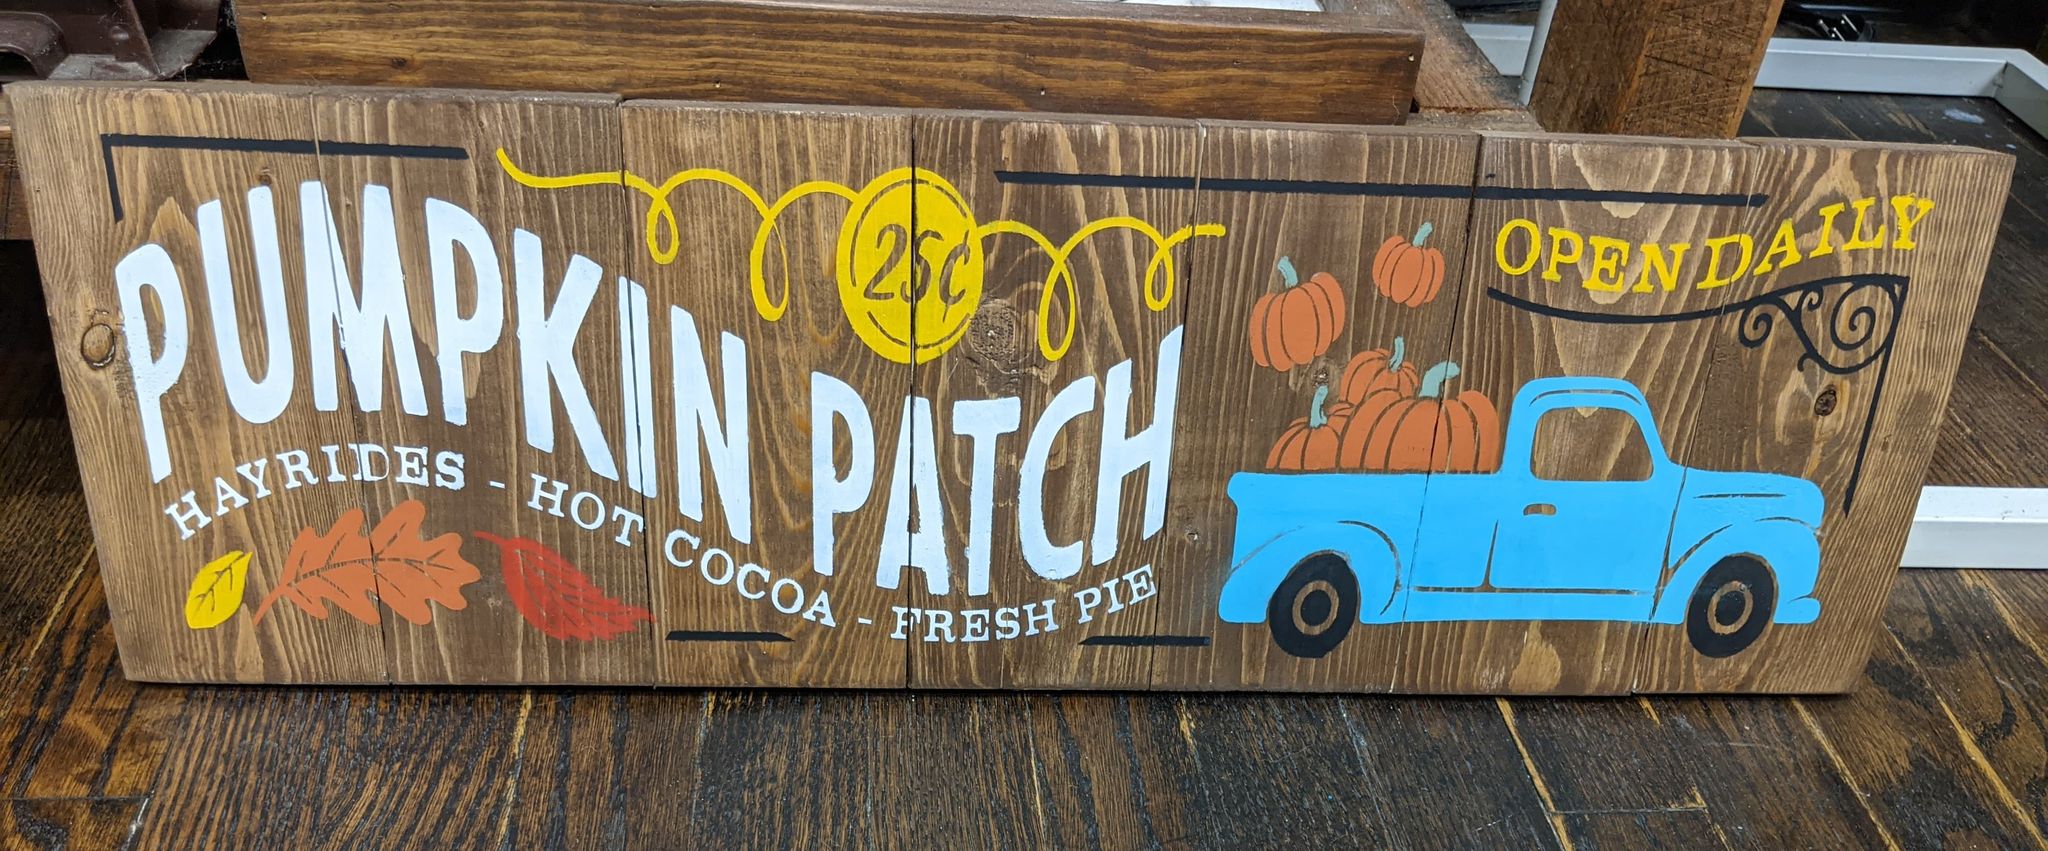 Pumpkin Patch Hayrides Hot Cocoa Fresh pie